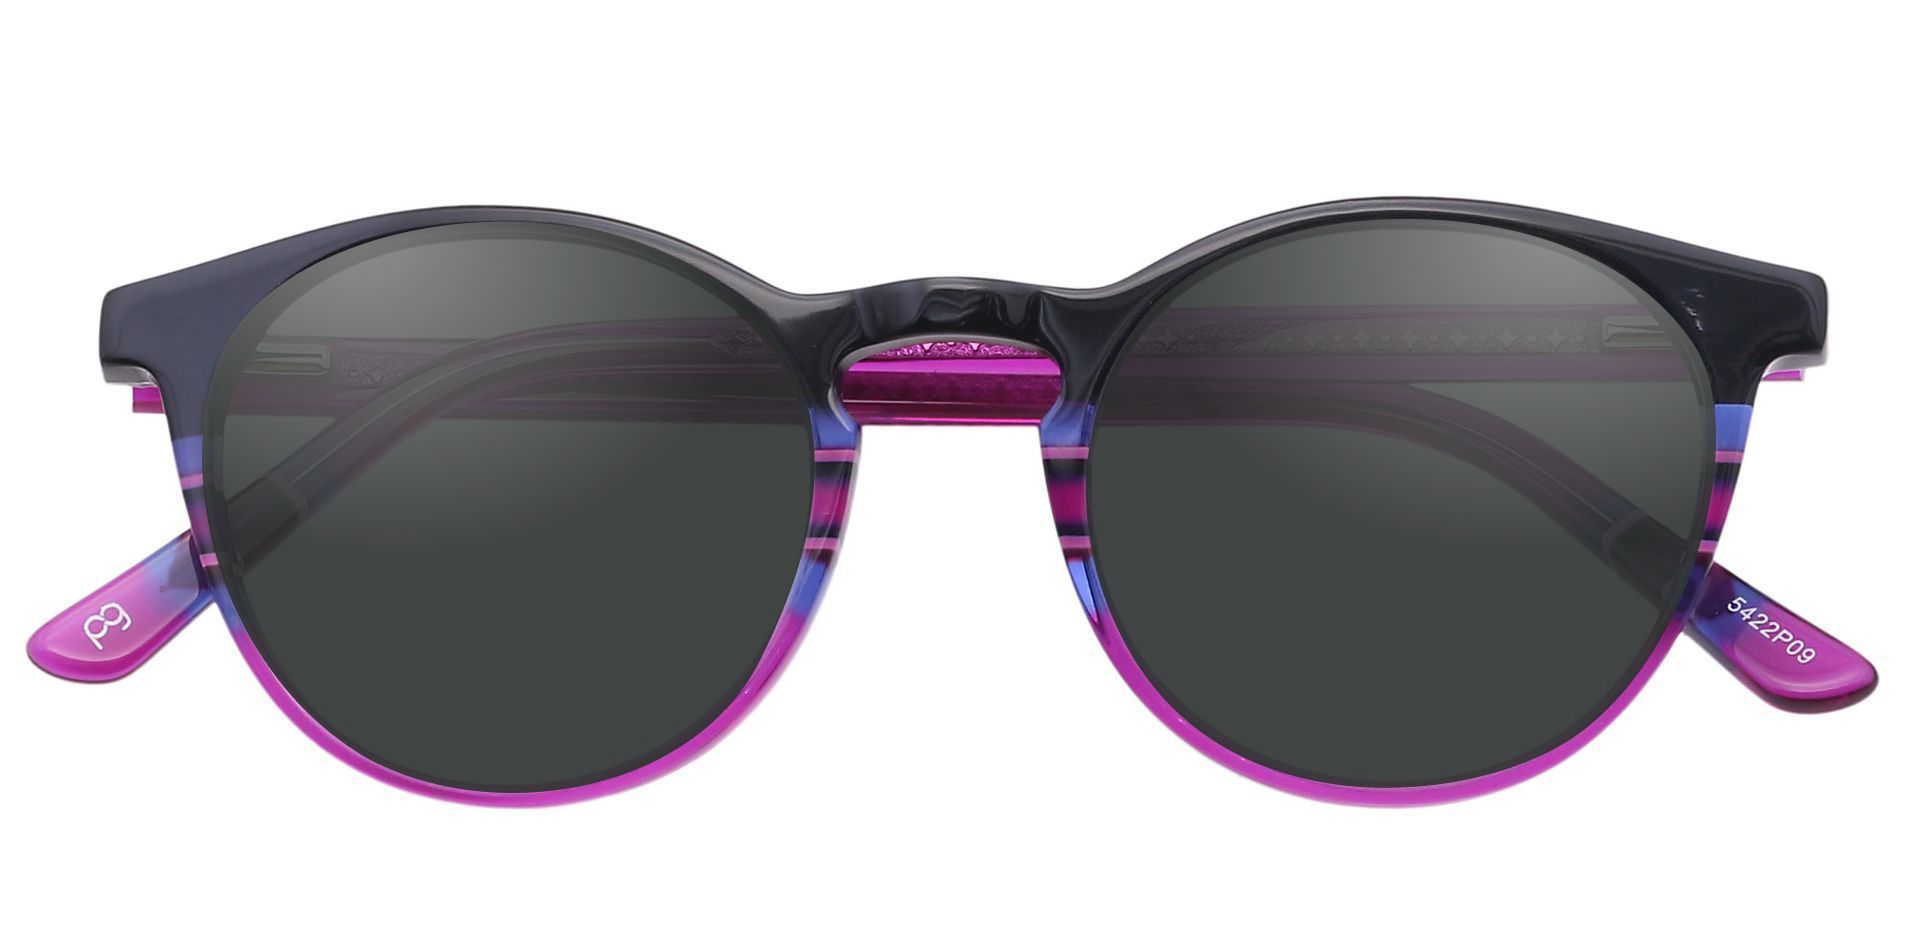 Jellie Round Progressive Sunglasses - Purple Frame With Gray Lenses